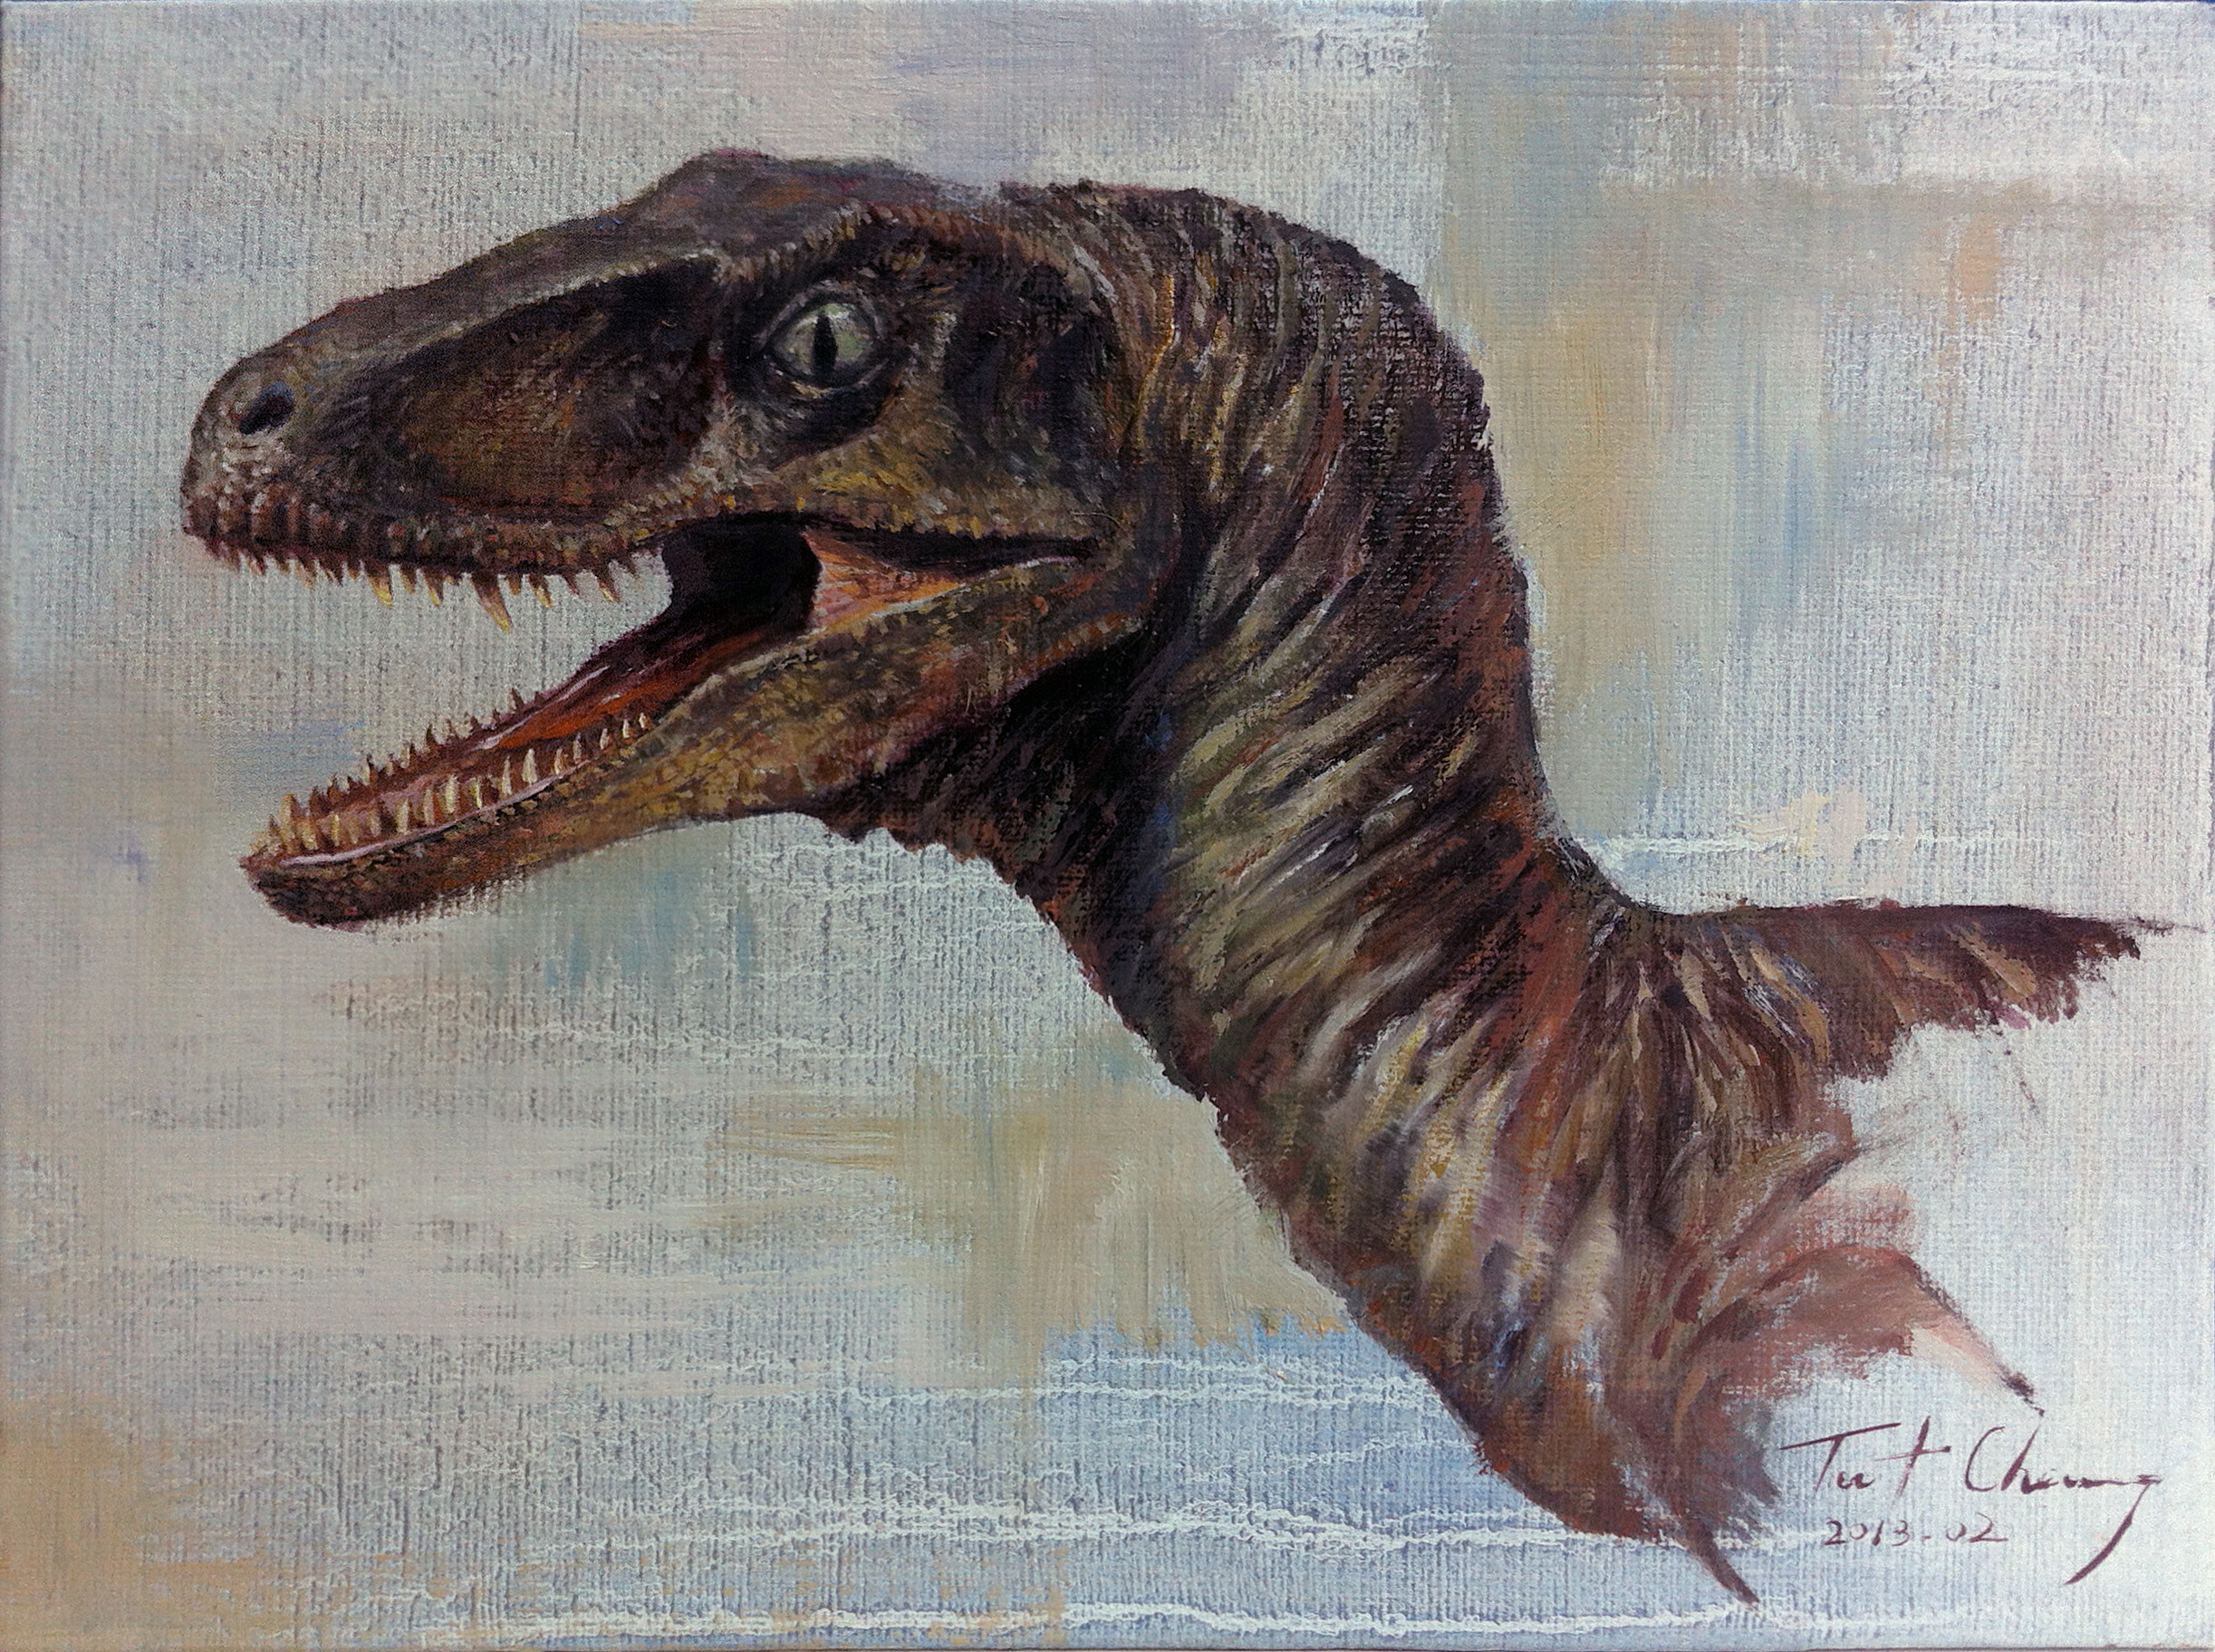 Animal Velociraptor HD Wallpaper | Background Image